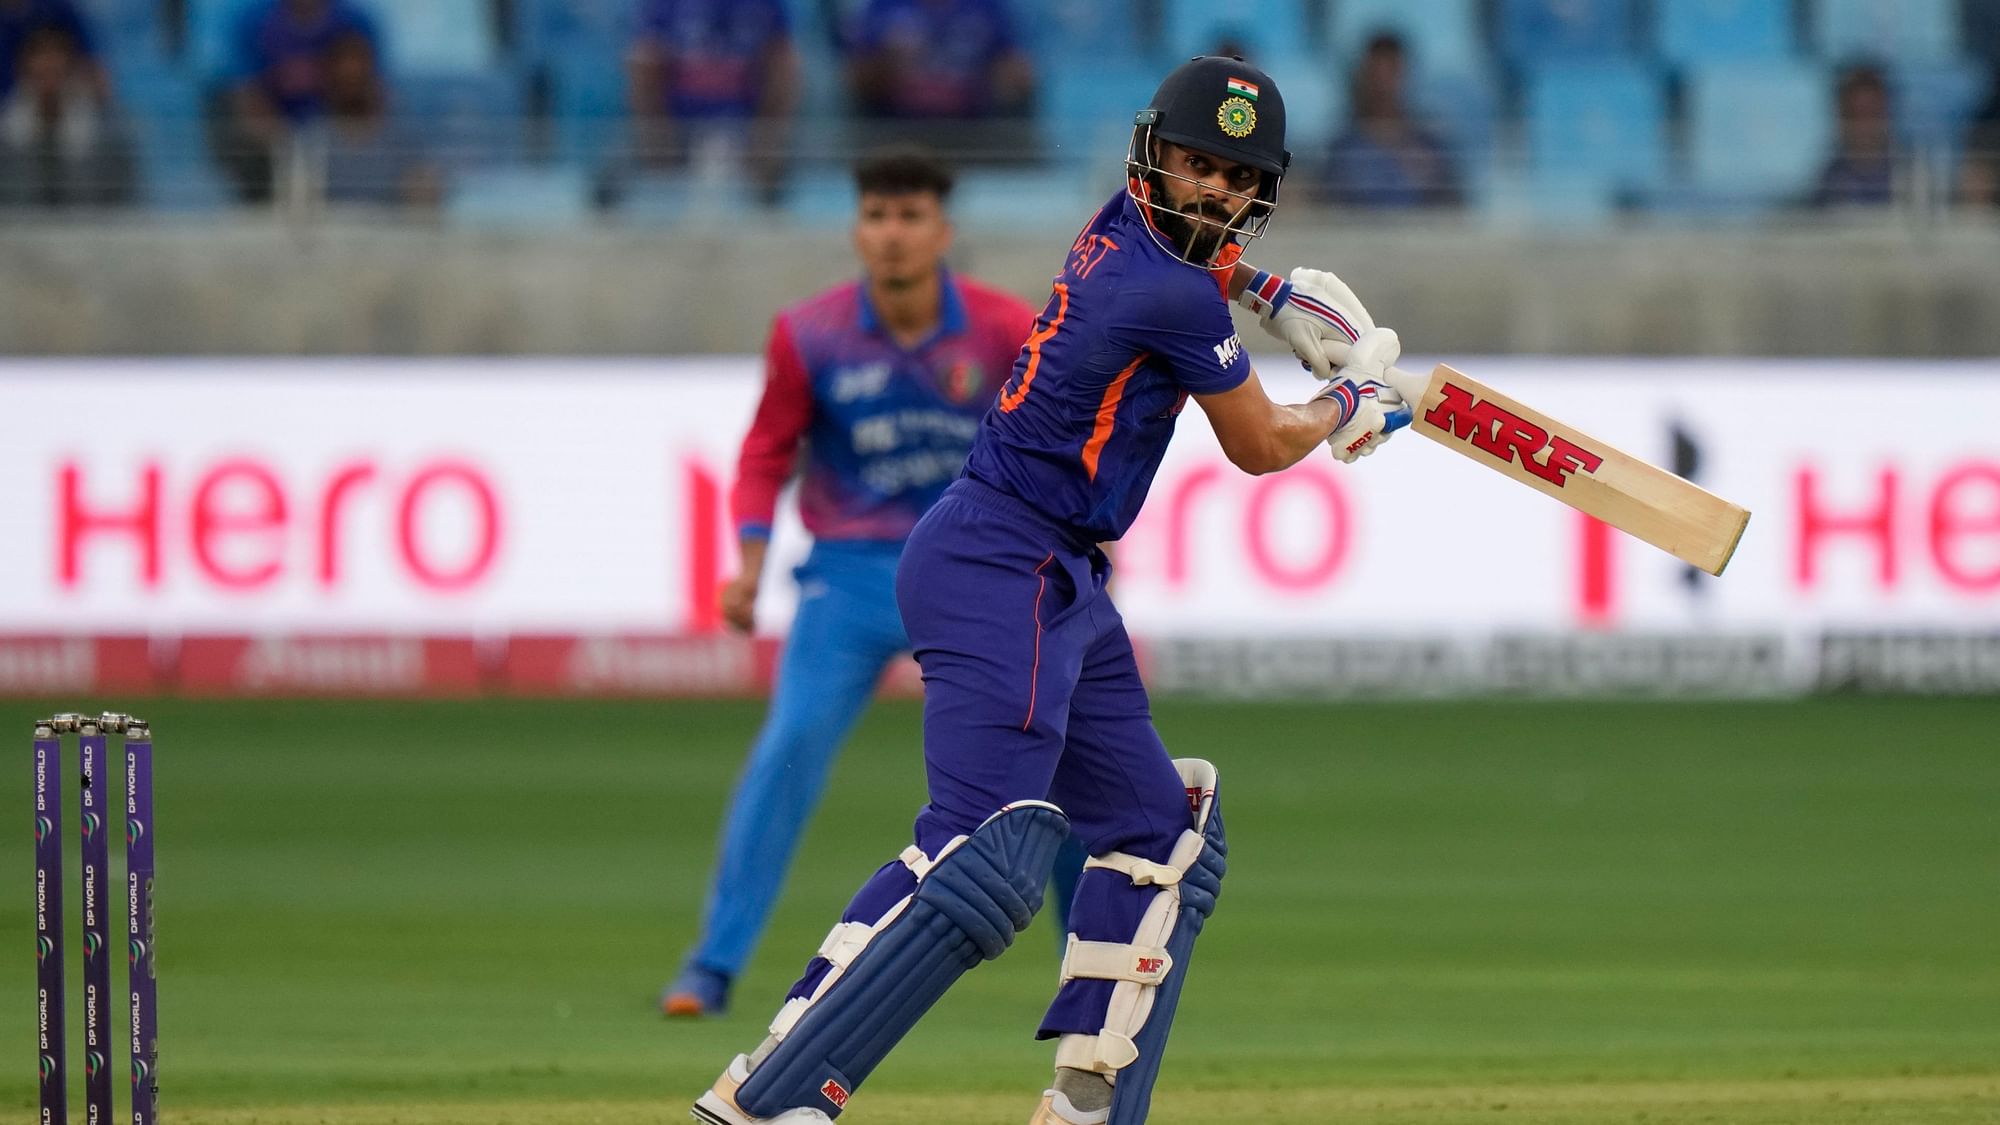 <div class="paragraphs"><p>Virat Kohli plays a shot during India's Asia Cup match against Afghanistan on Thursday.</p></div>